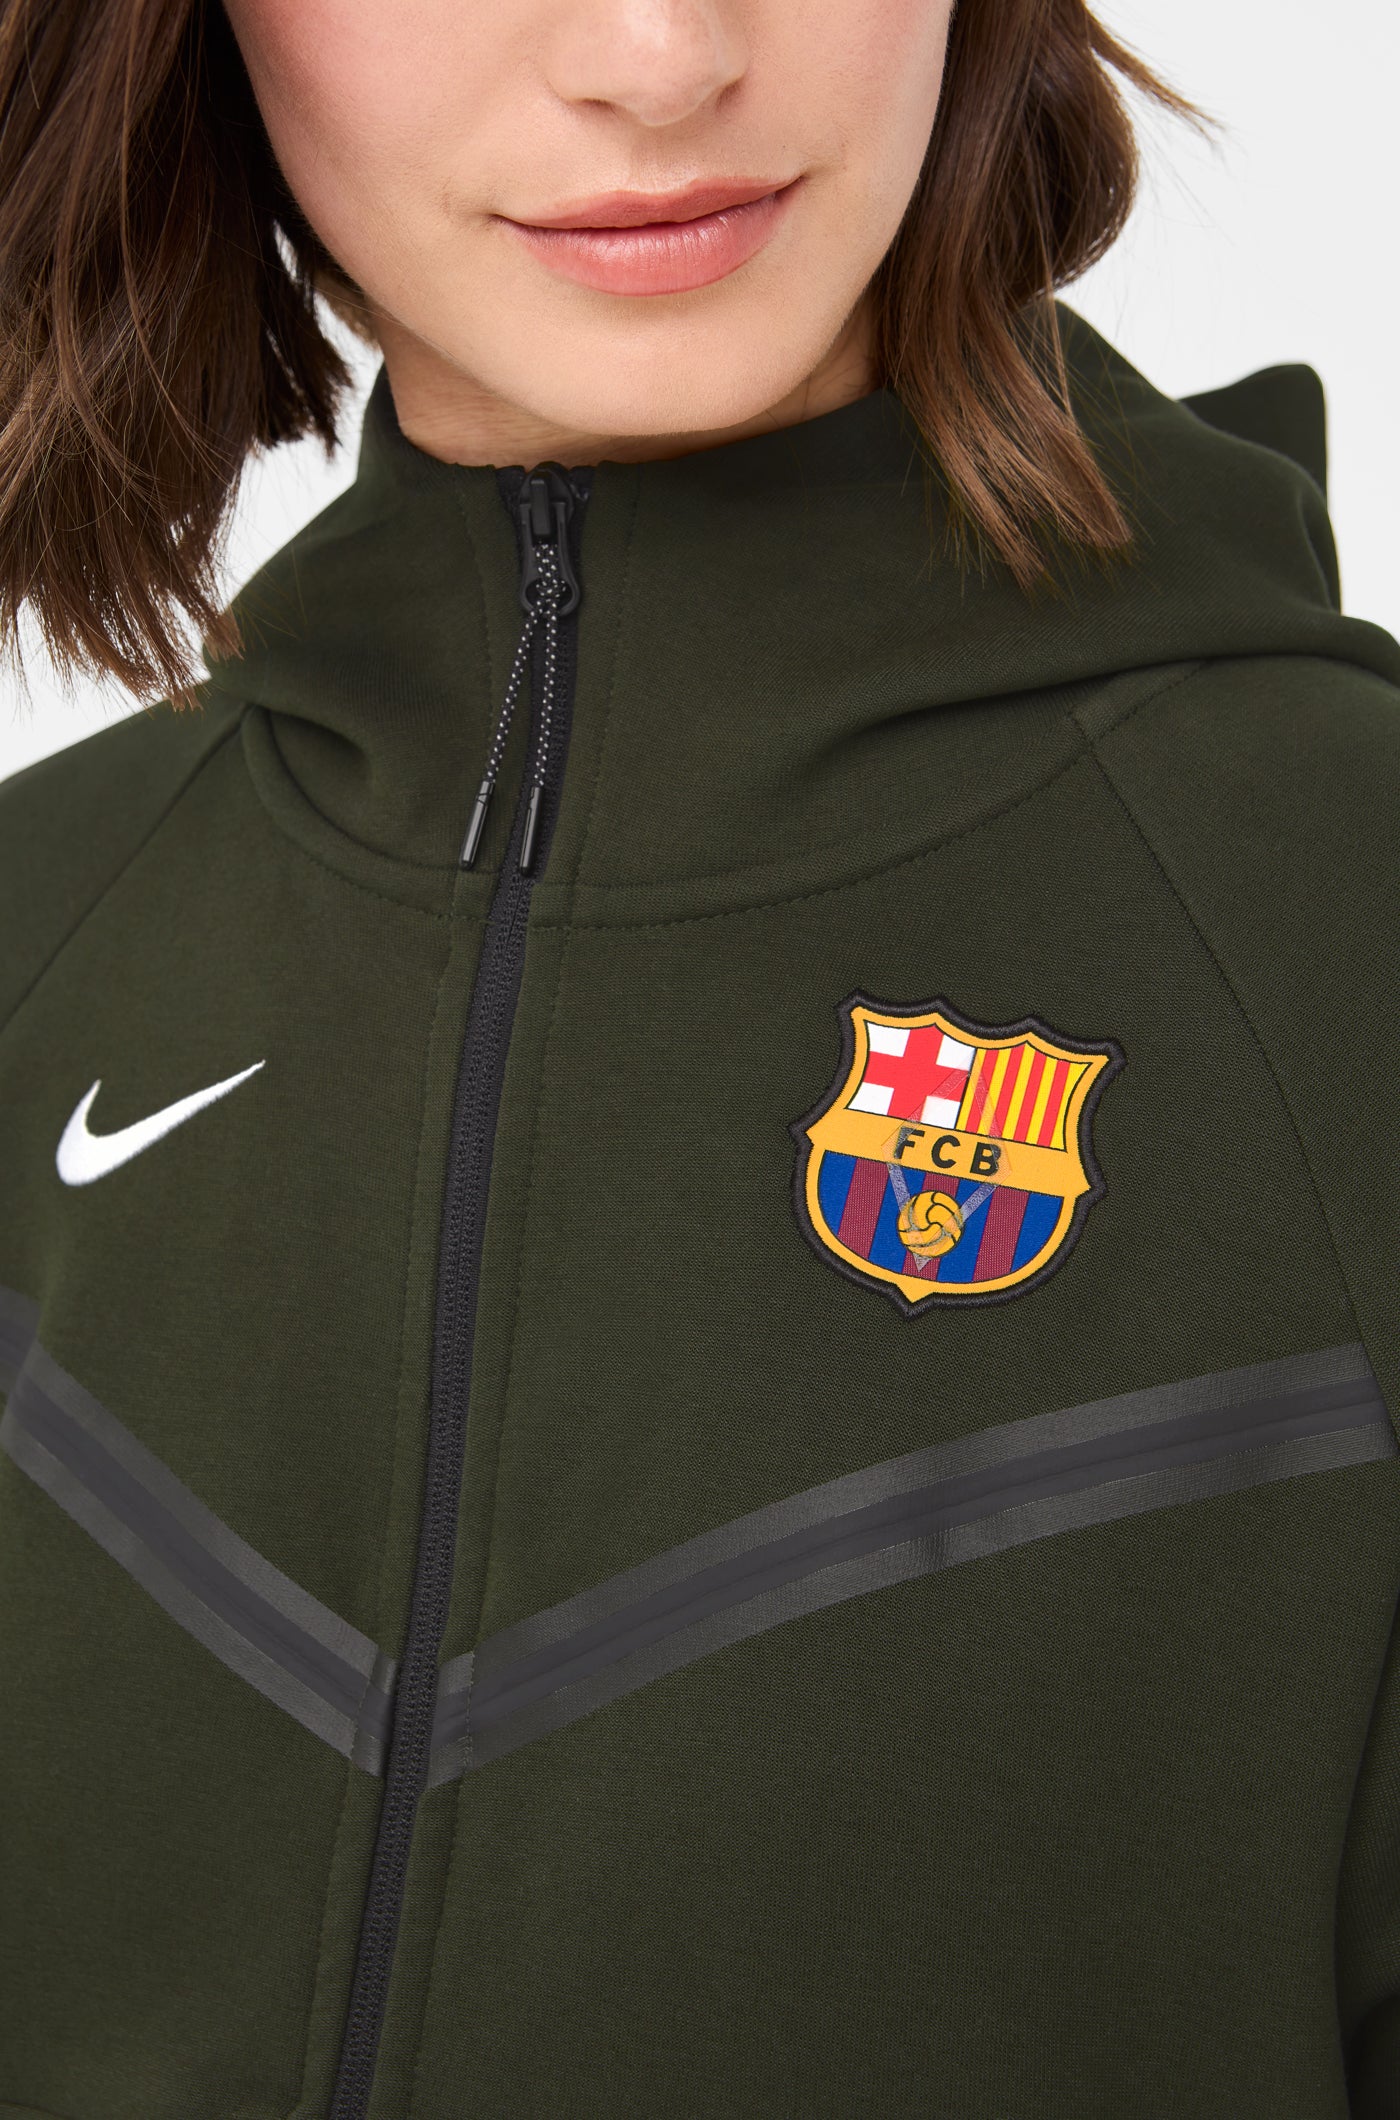 Chaqueta verde Barça Nike - Mujer